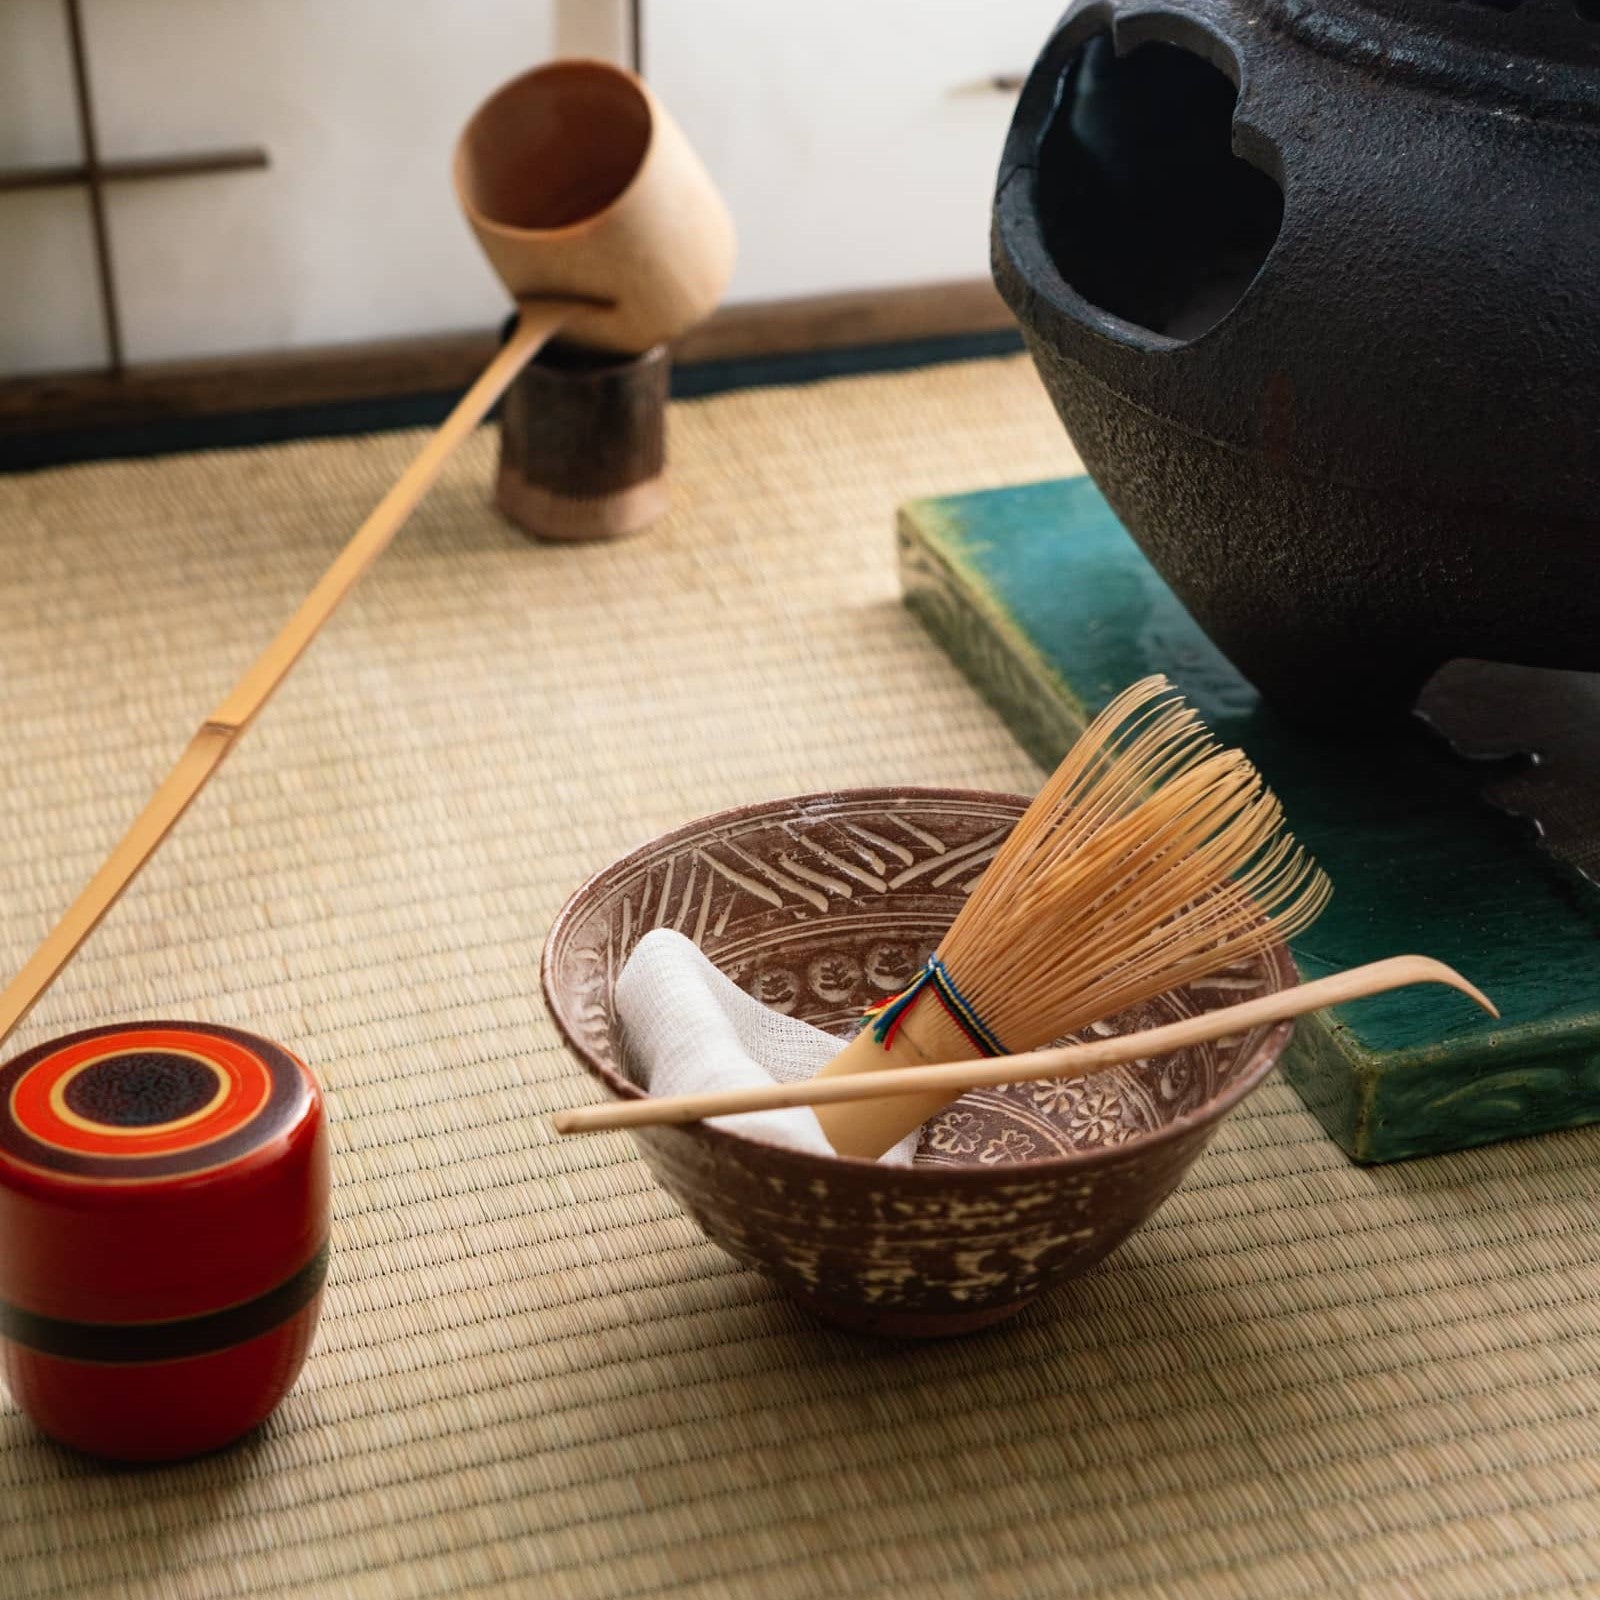 Japanese ceramic matcha set with a natural bamboo whisk